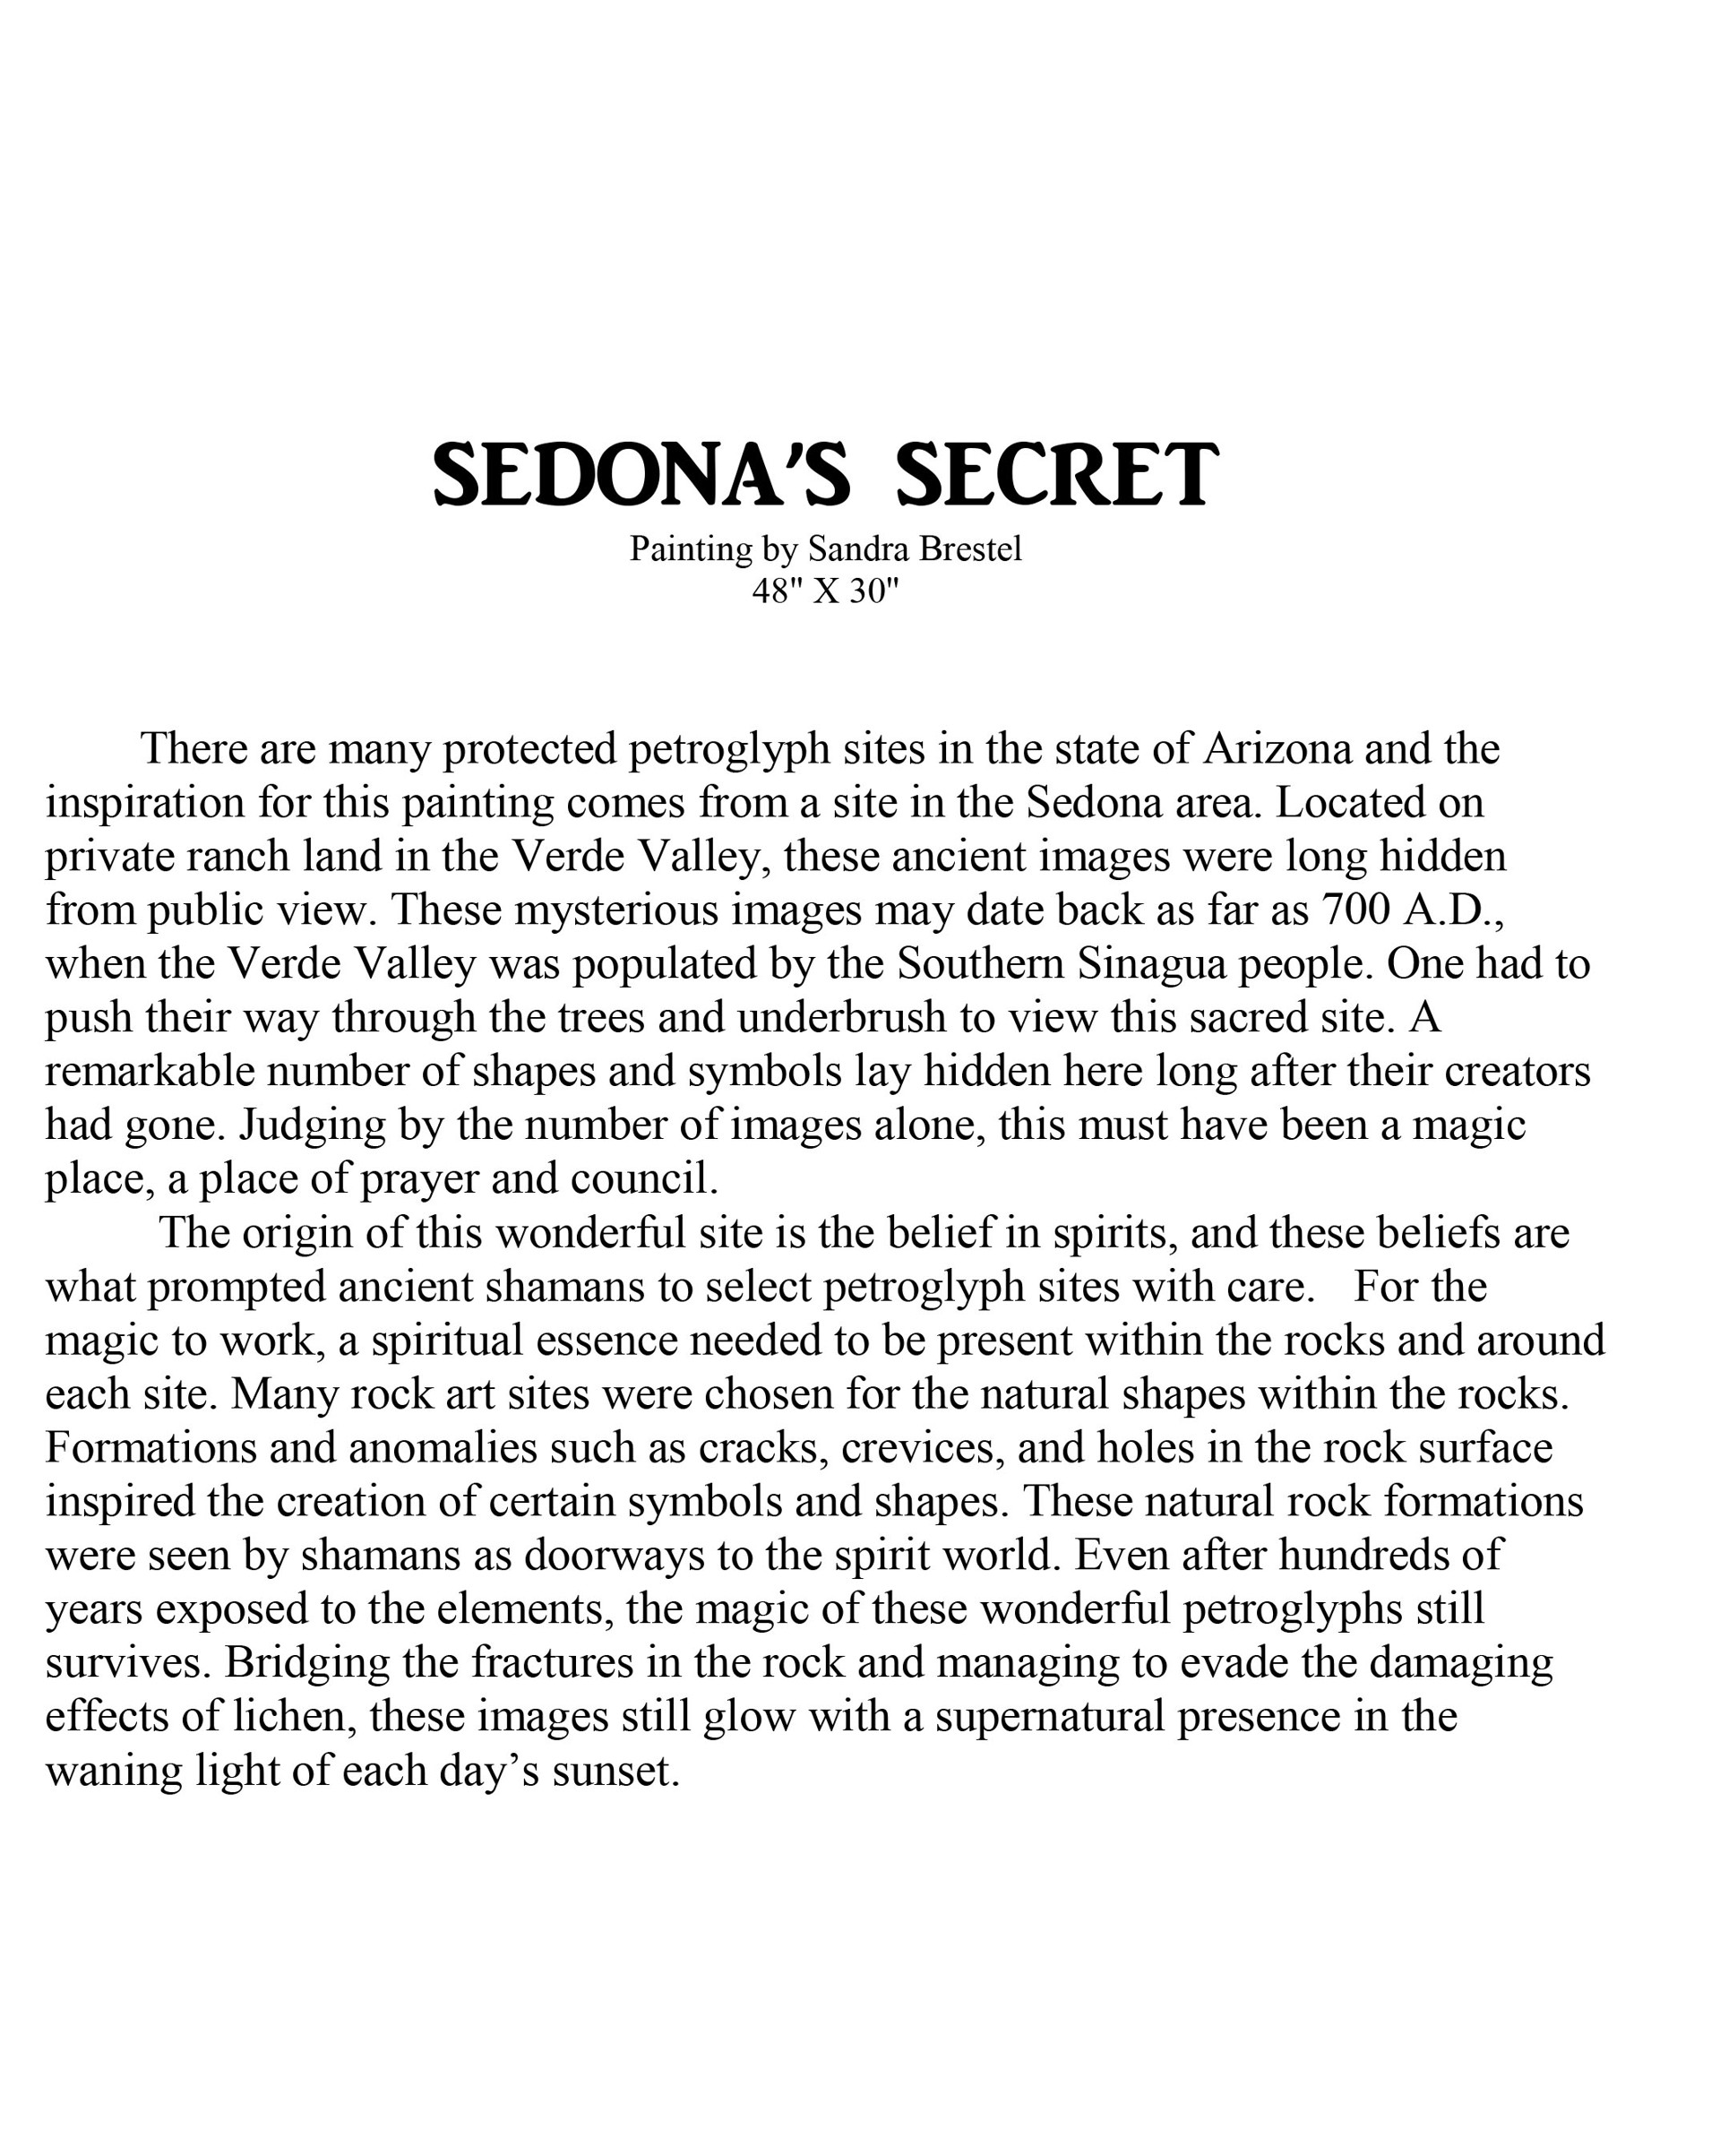 Sedona's Secret by Sandra Brestel Limited Editions